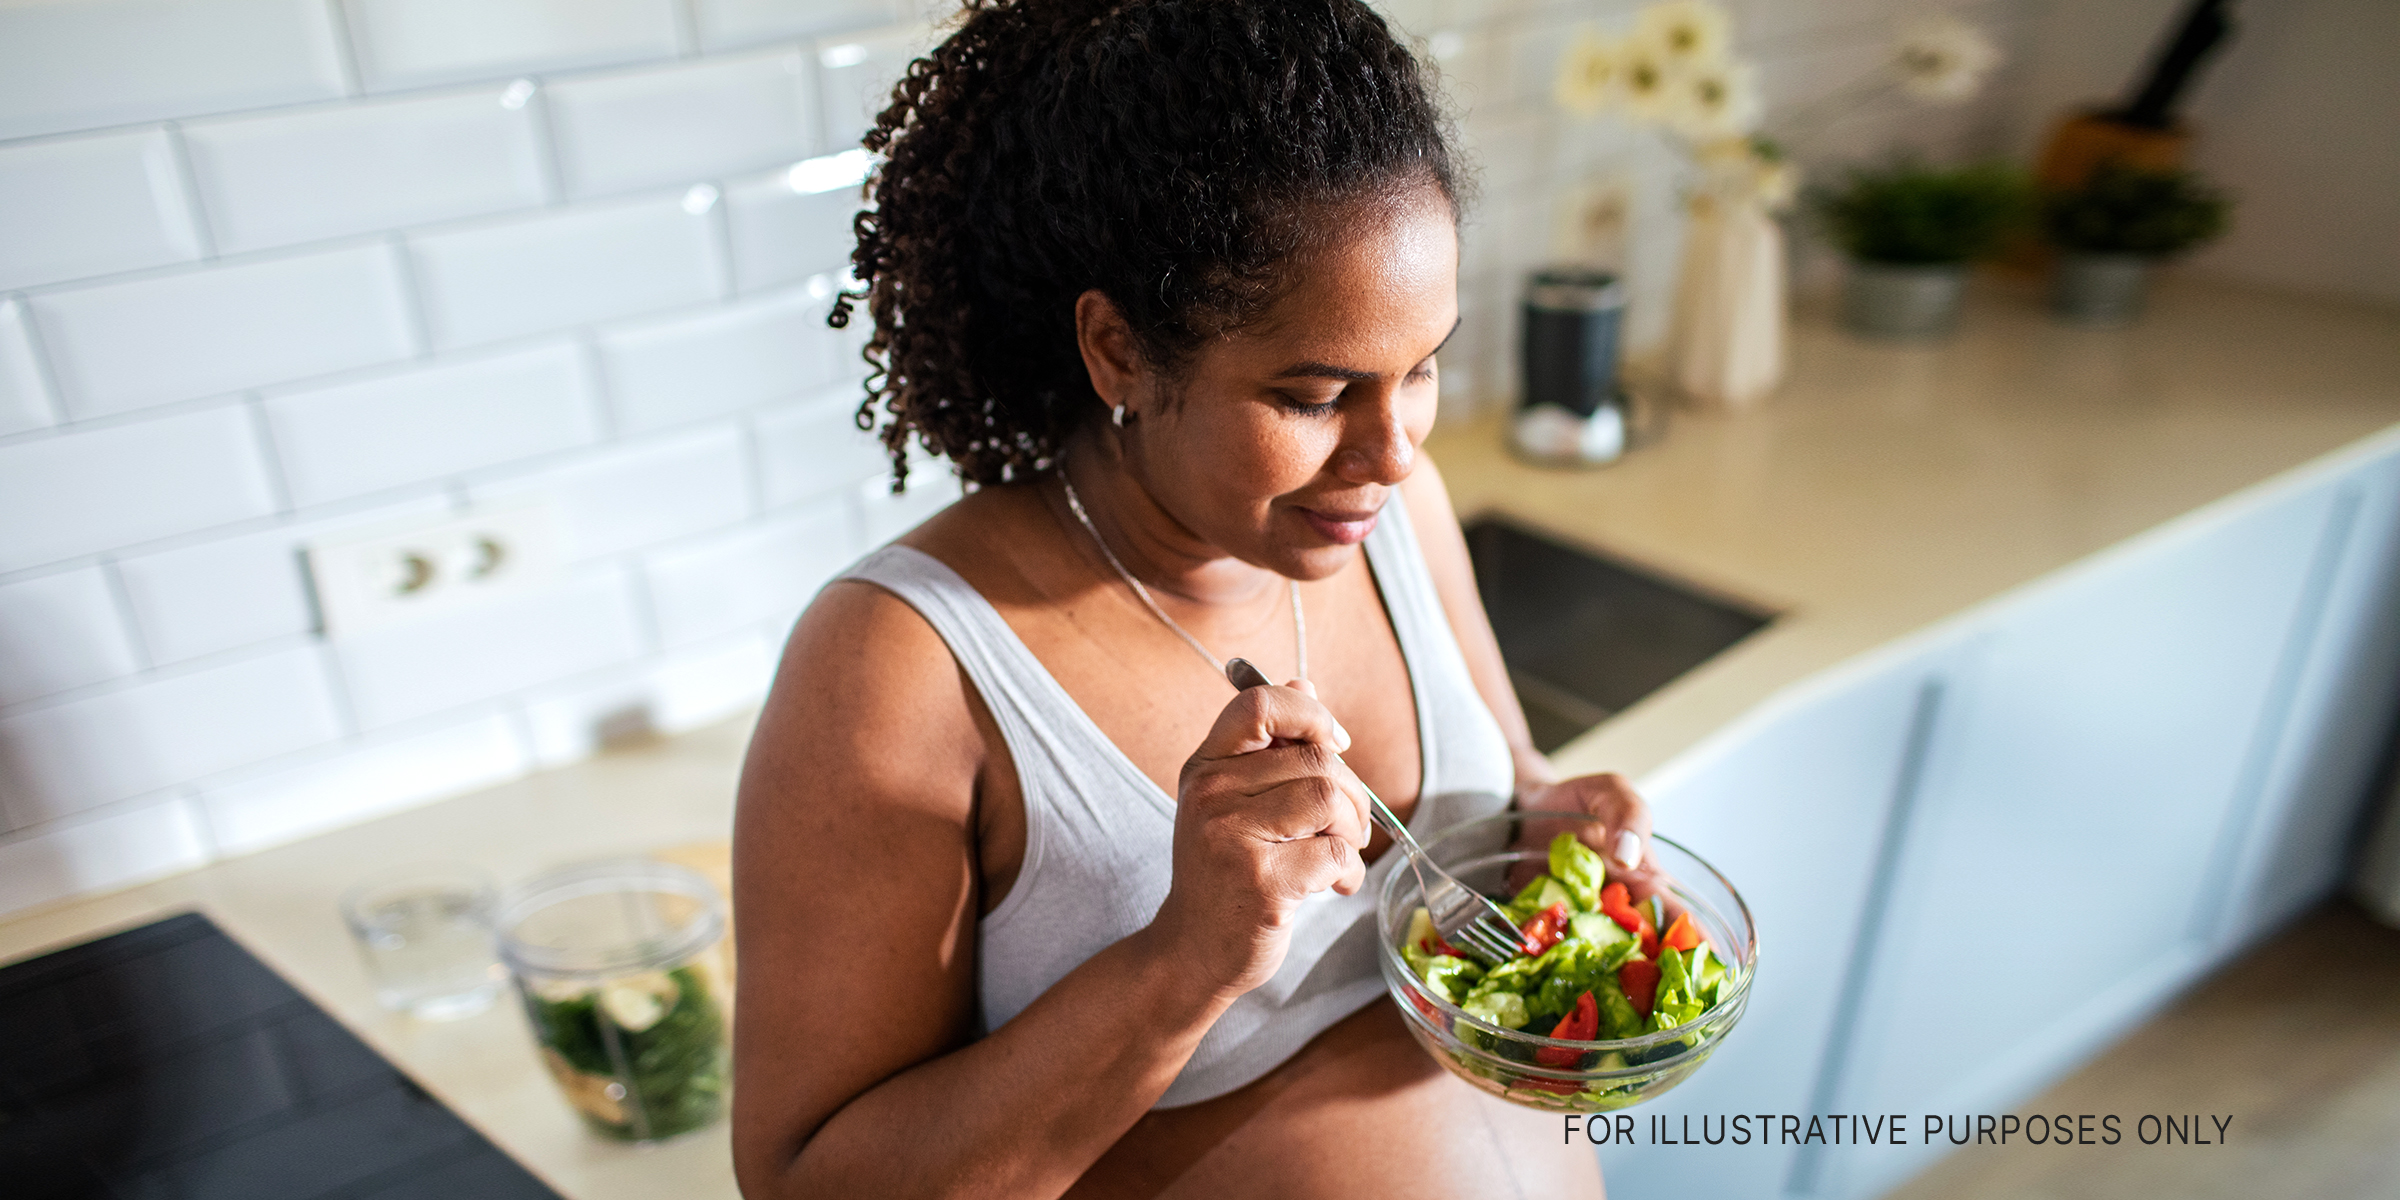 A woman eating | Source: Shutterstock